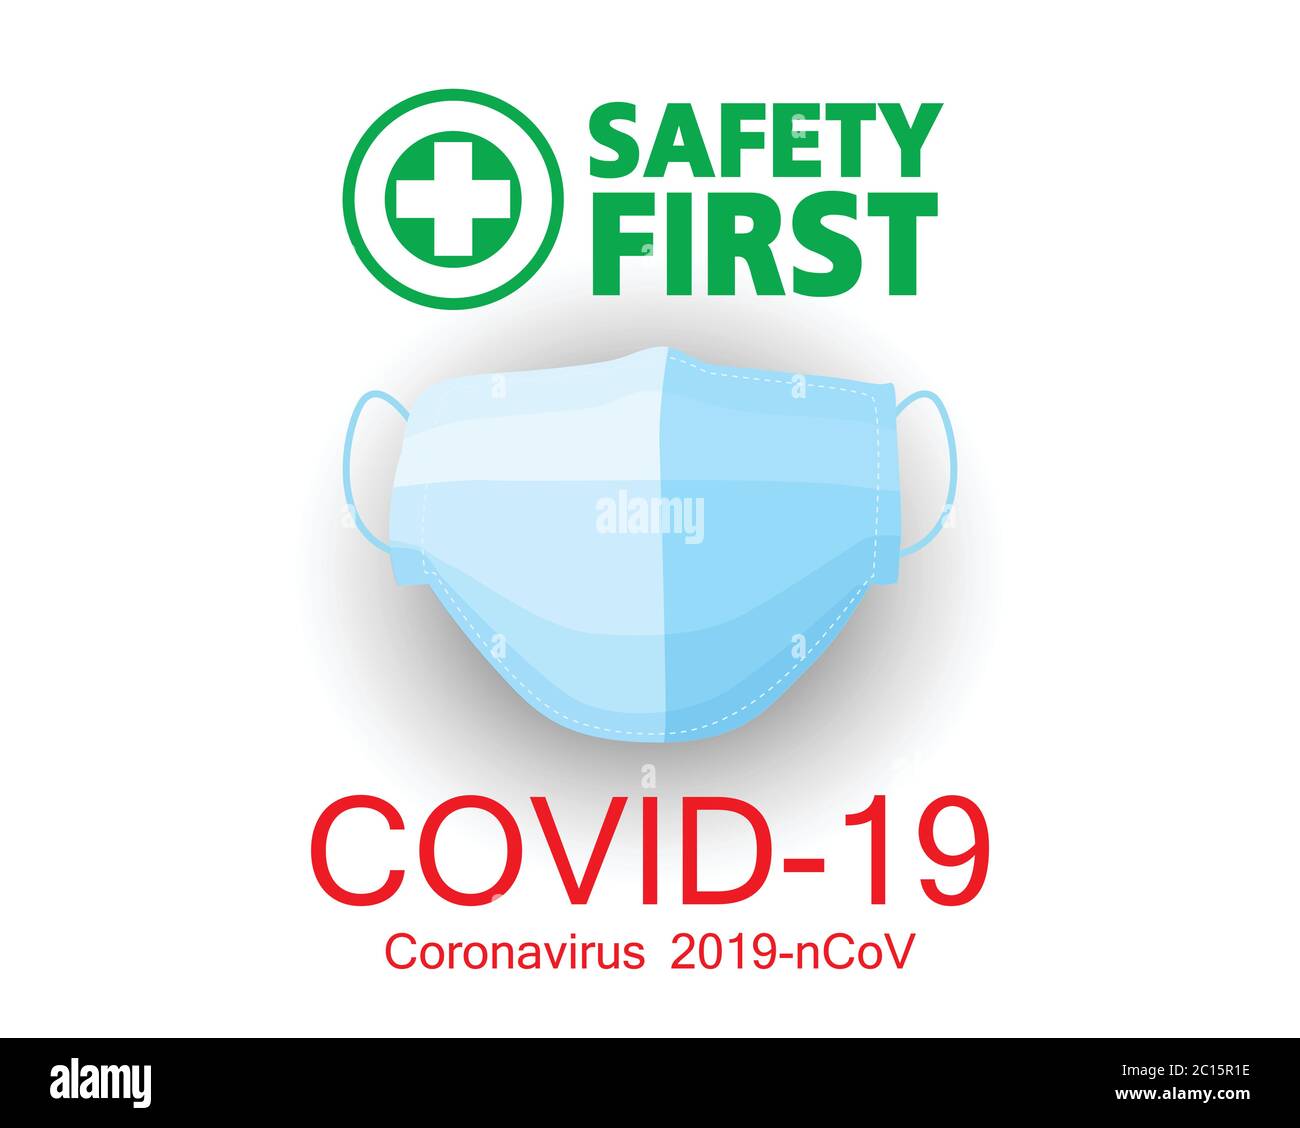 Covid-19, Krankheit, Coronavirus 2019-nCoV-Konzept, Maske zum Schutz, Sicherheit zuerst Stock Vektor